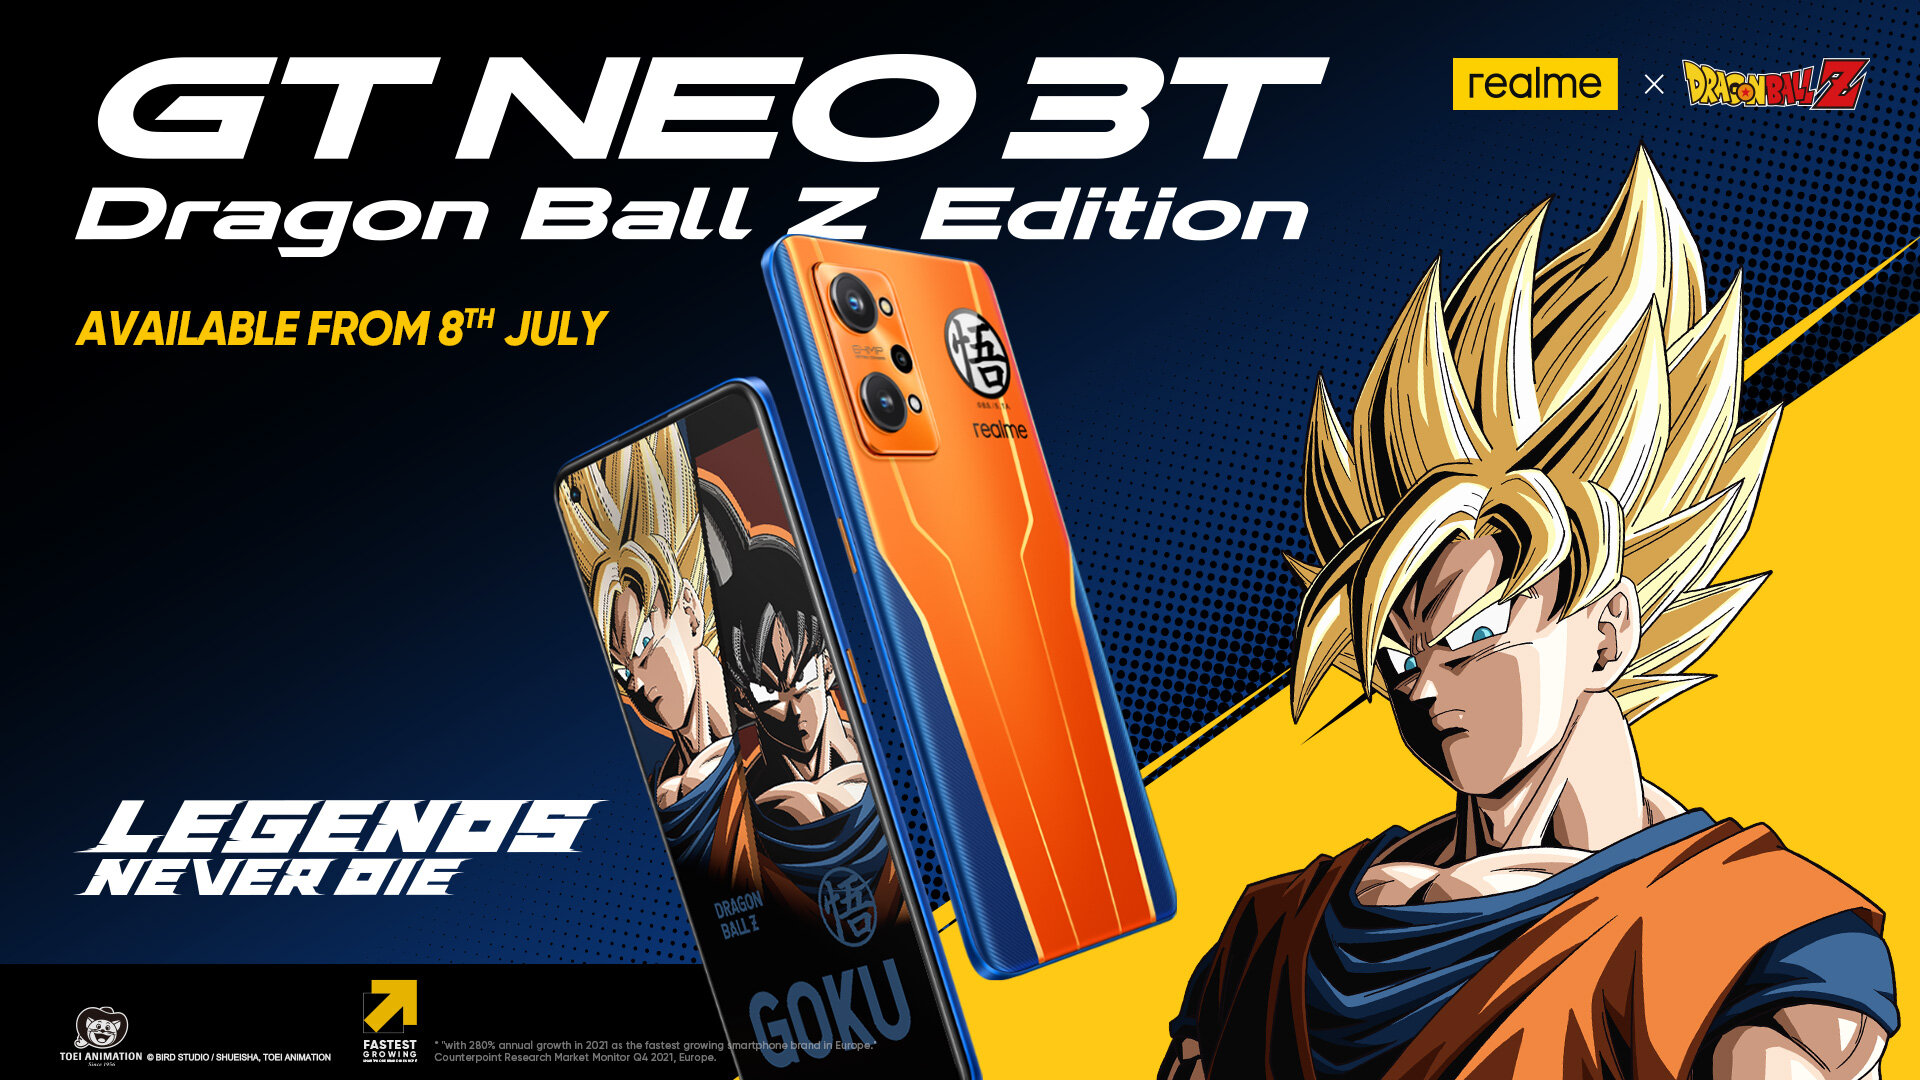 Realme GT Neo 3T Dragon Ball Z Edition